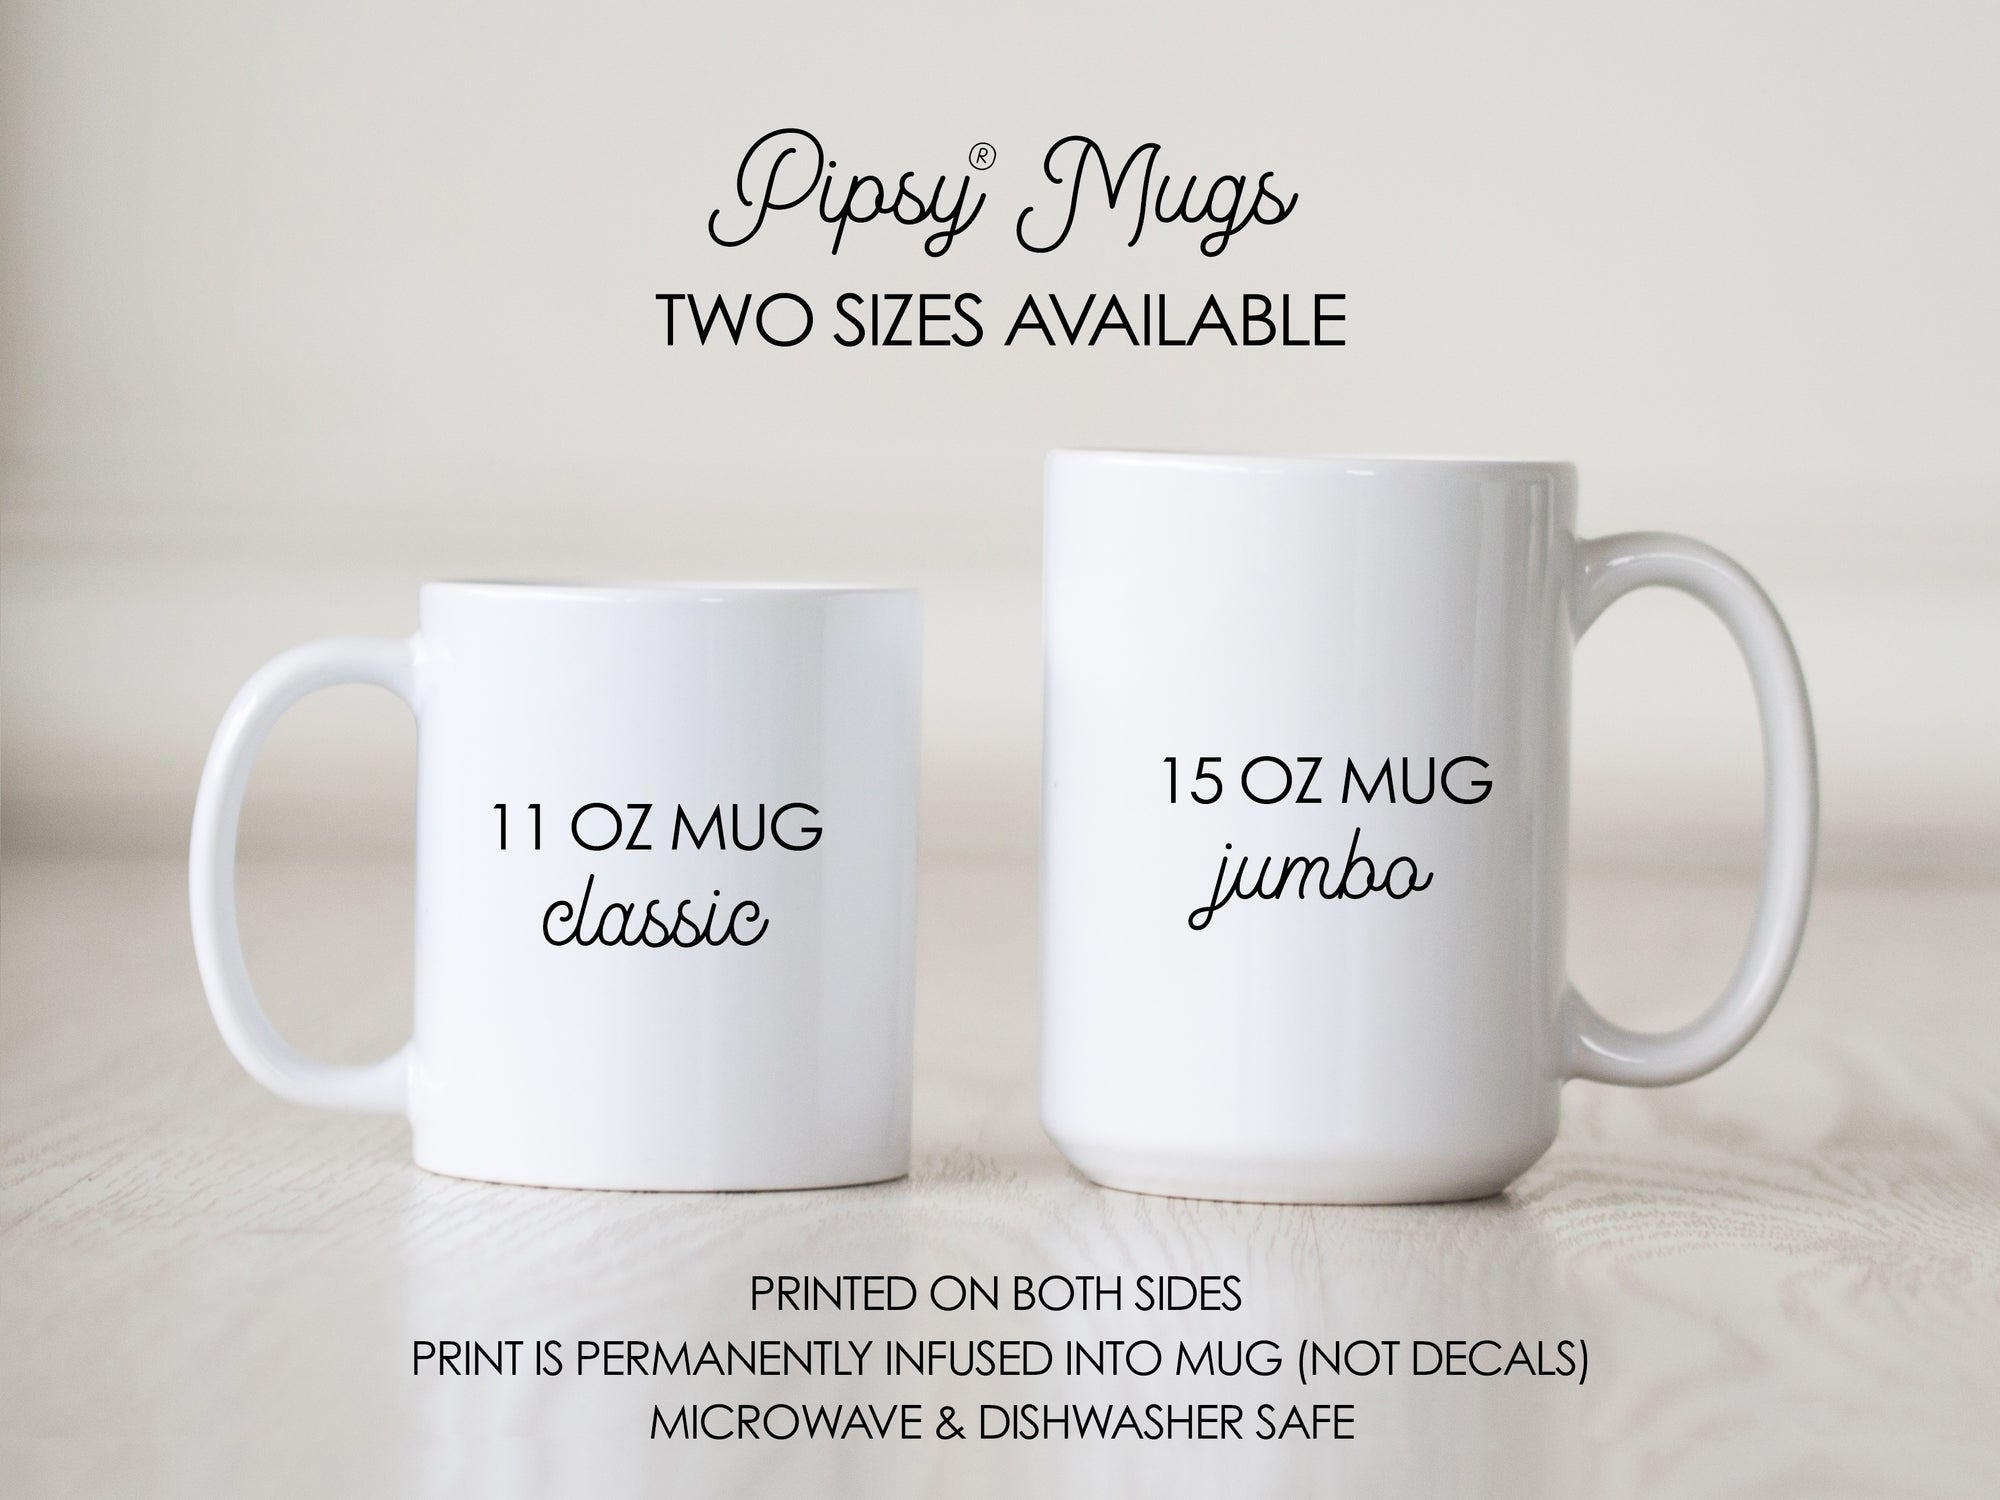 Pipsy Mug Sizes, 11 ounce (standard) or 15 ounce (jumbo)